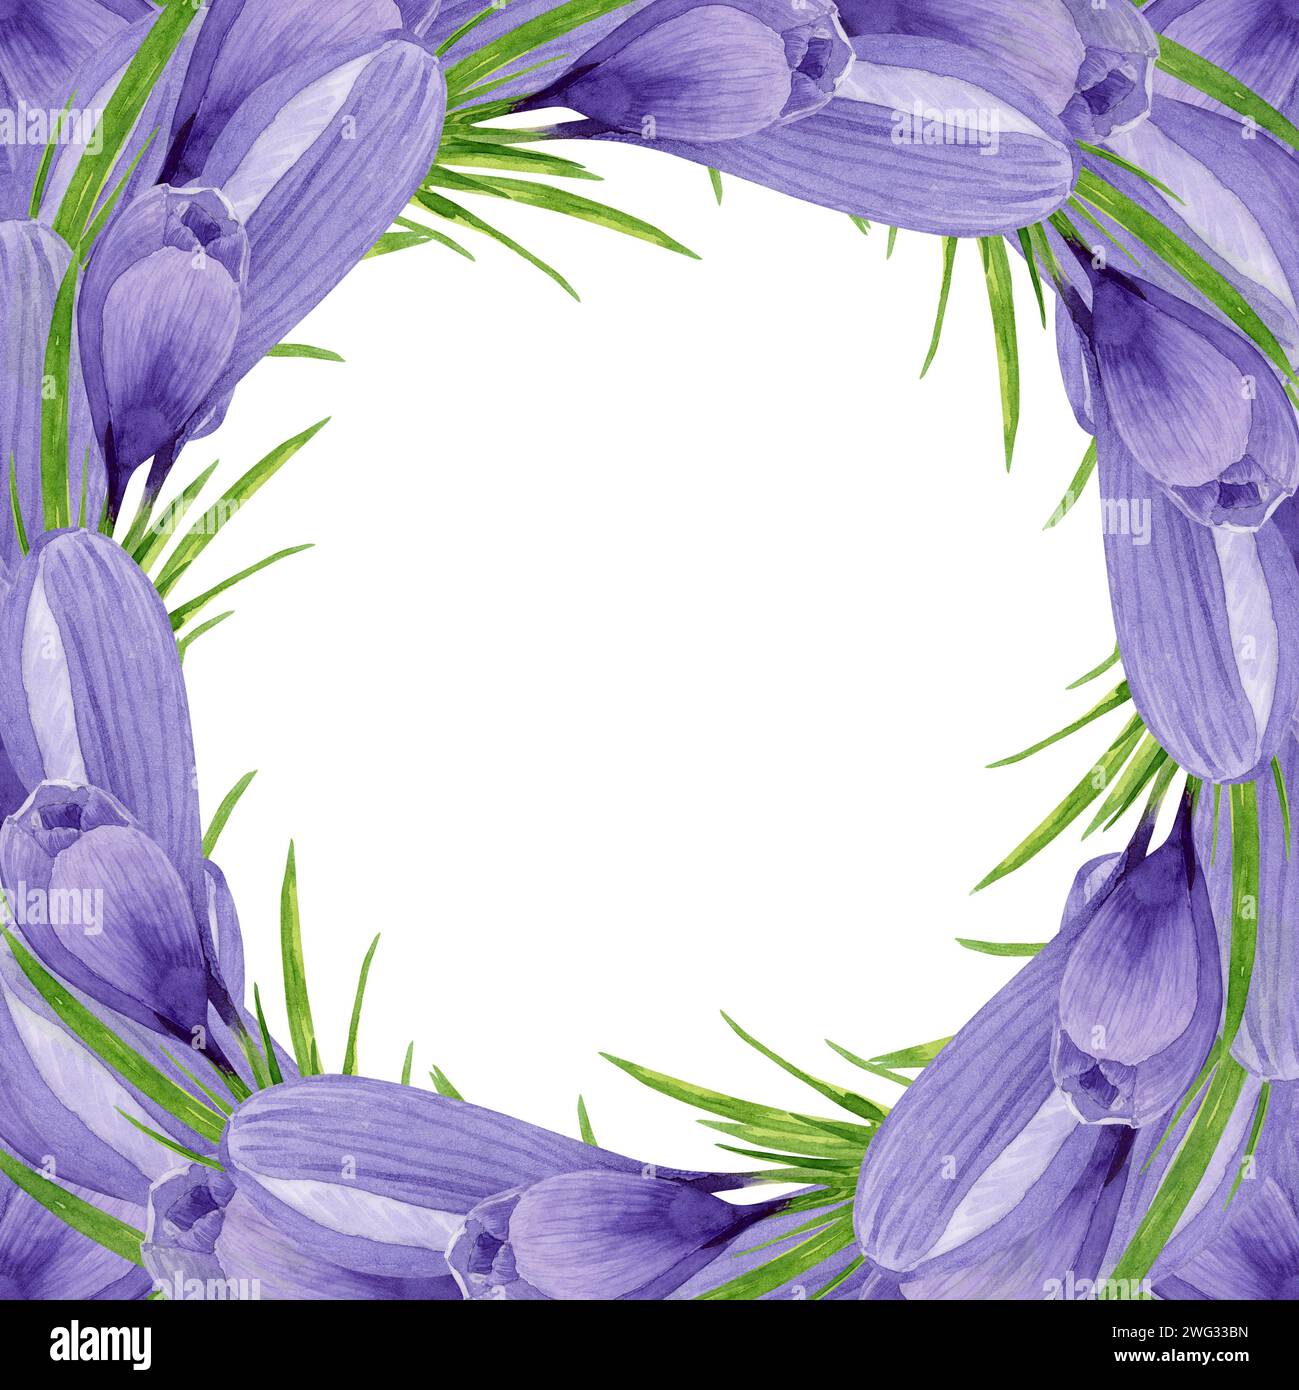 Watercolor purple crocuses frame, spring flowers arrangement. Hand painted watercolor floral illustration. Design element for label, logo, packaging, Stock Photo